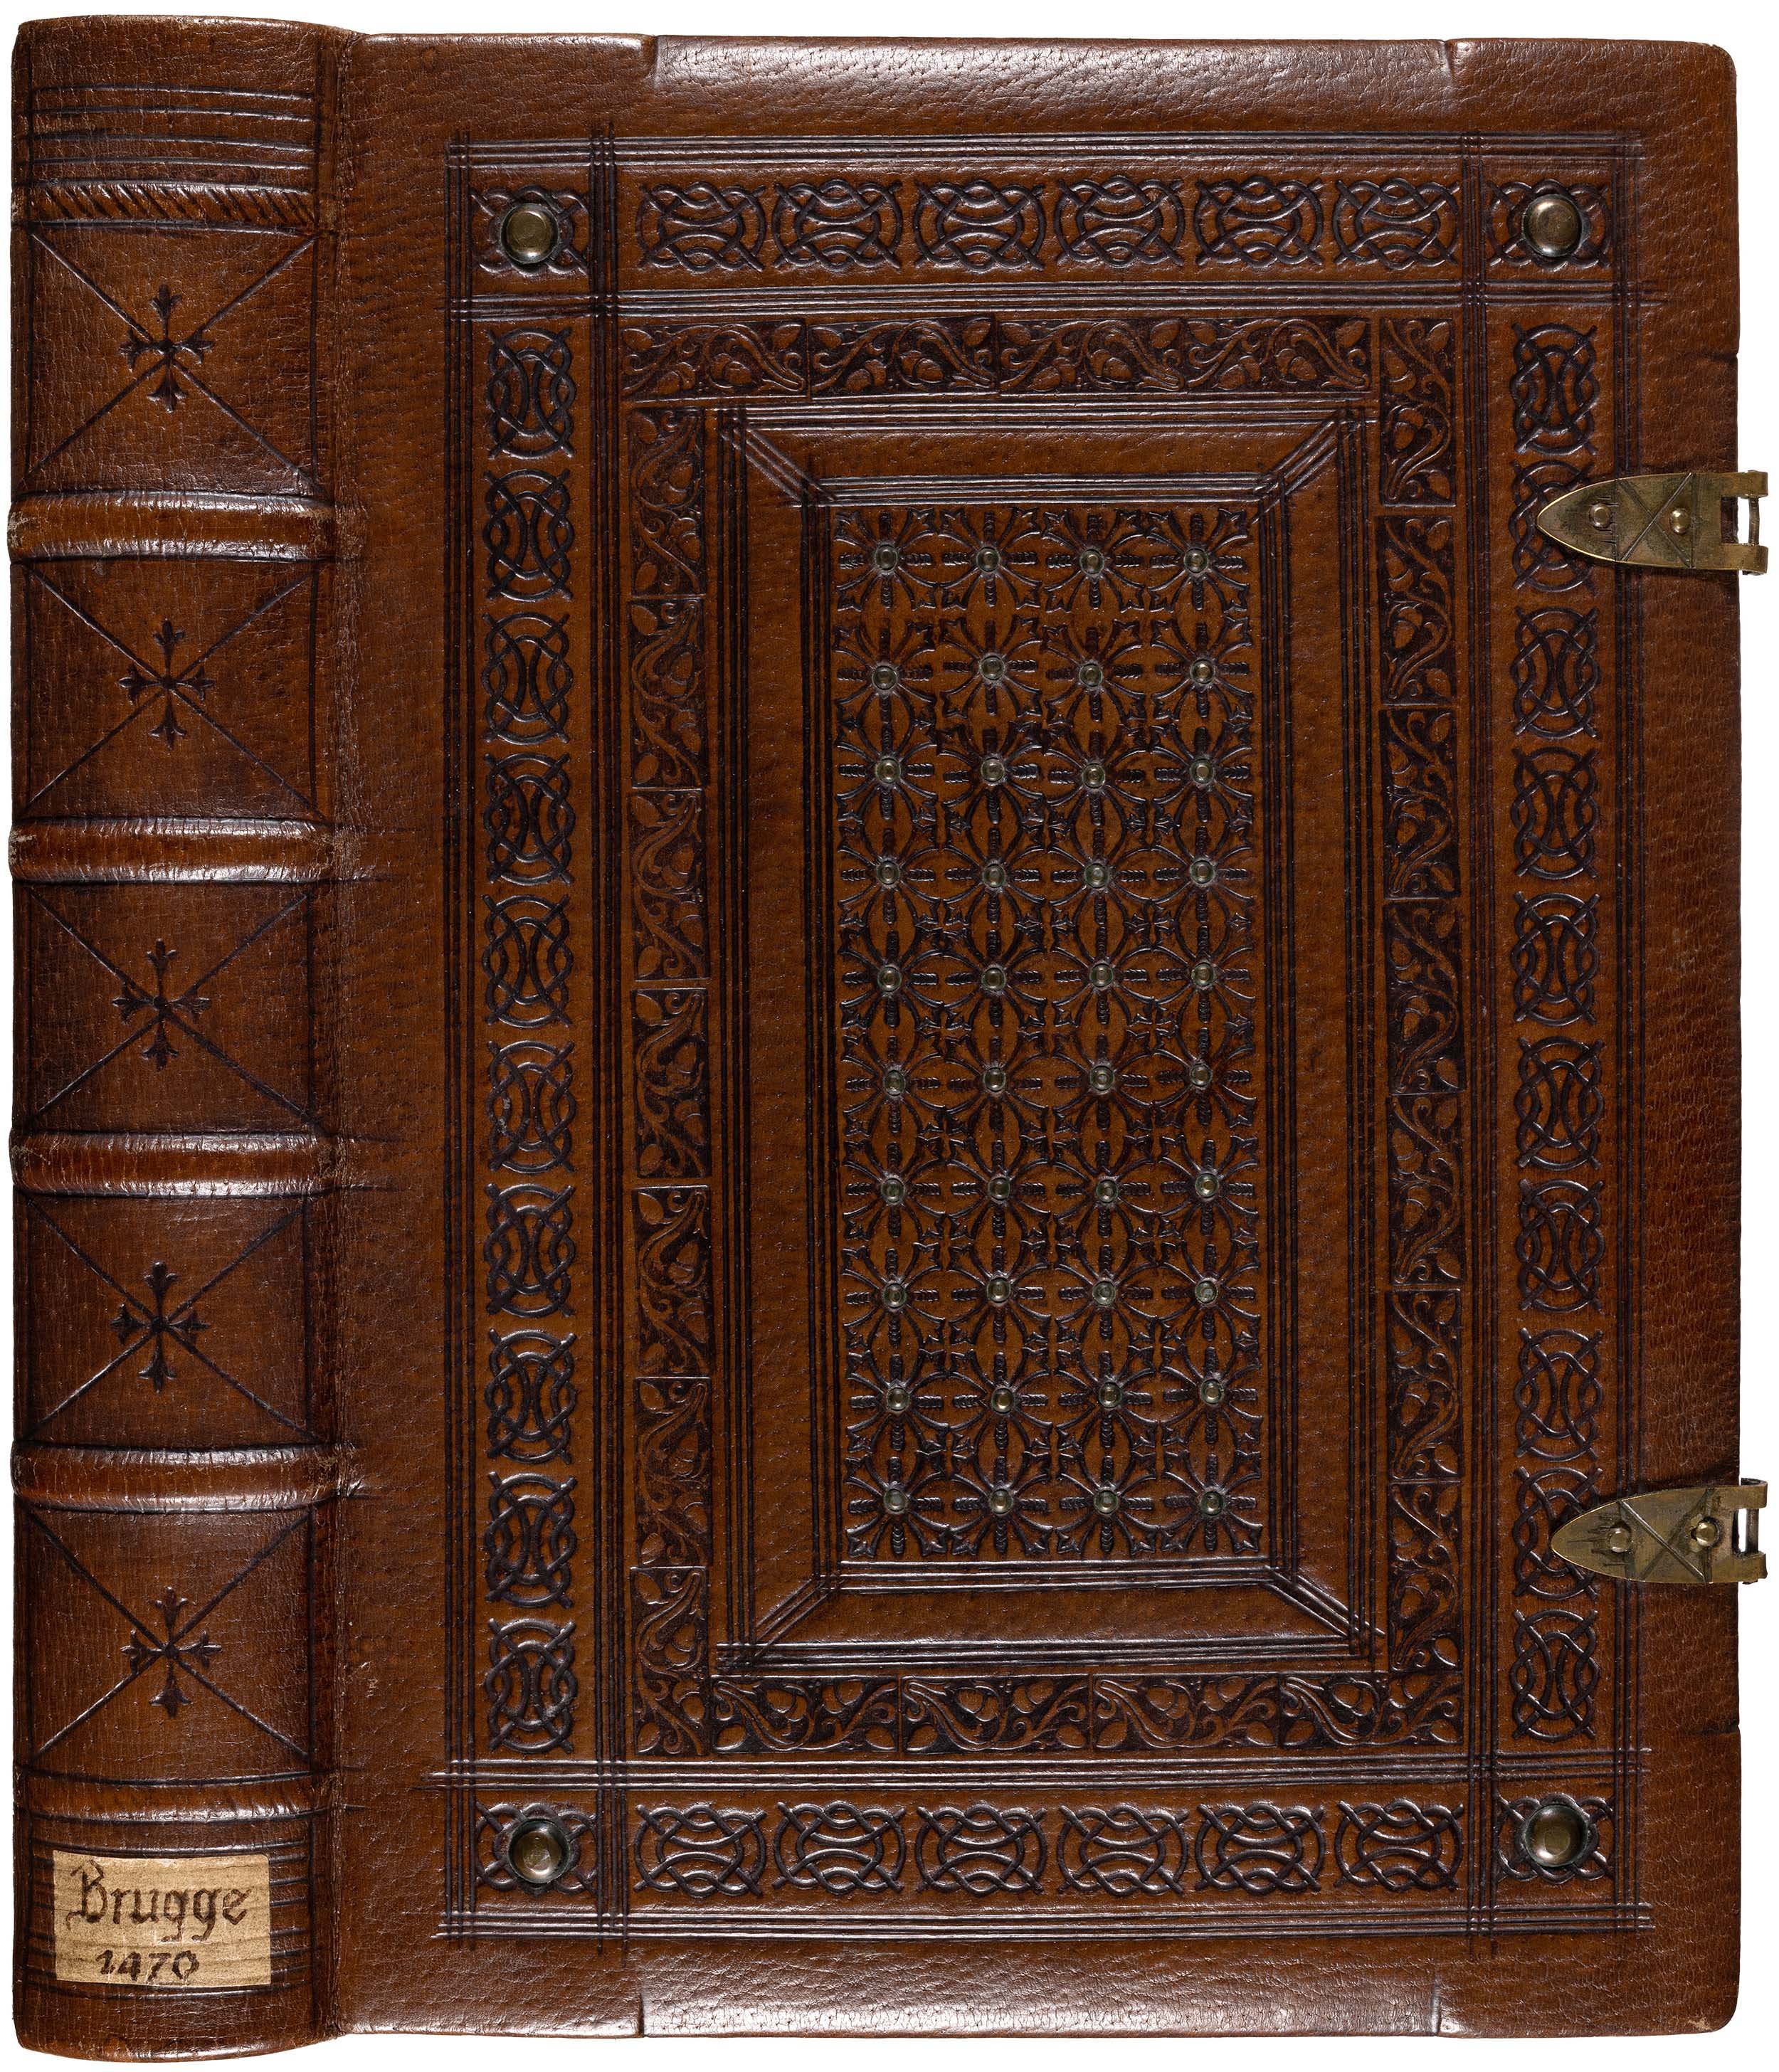 Book-of-hours-claude-toulongeon-grisaille-order-golden-fleece-bruges-edward-iv-folio-01.jpg